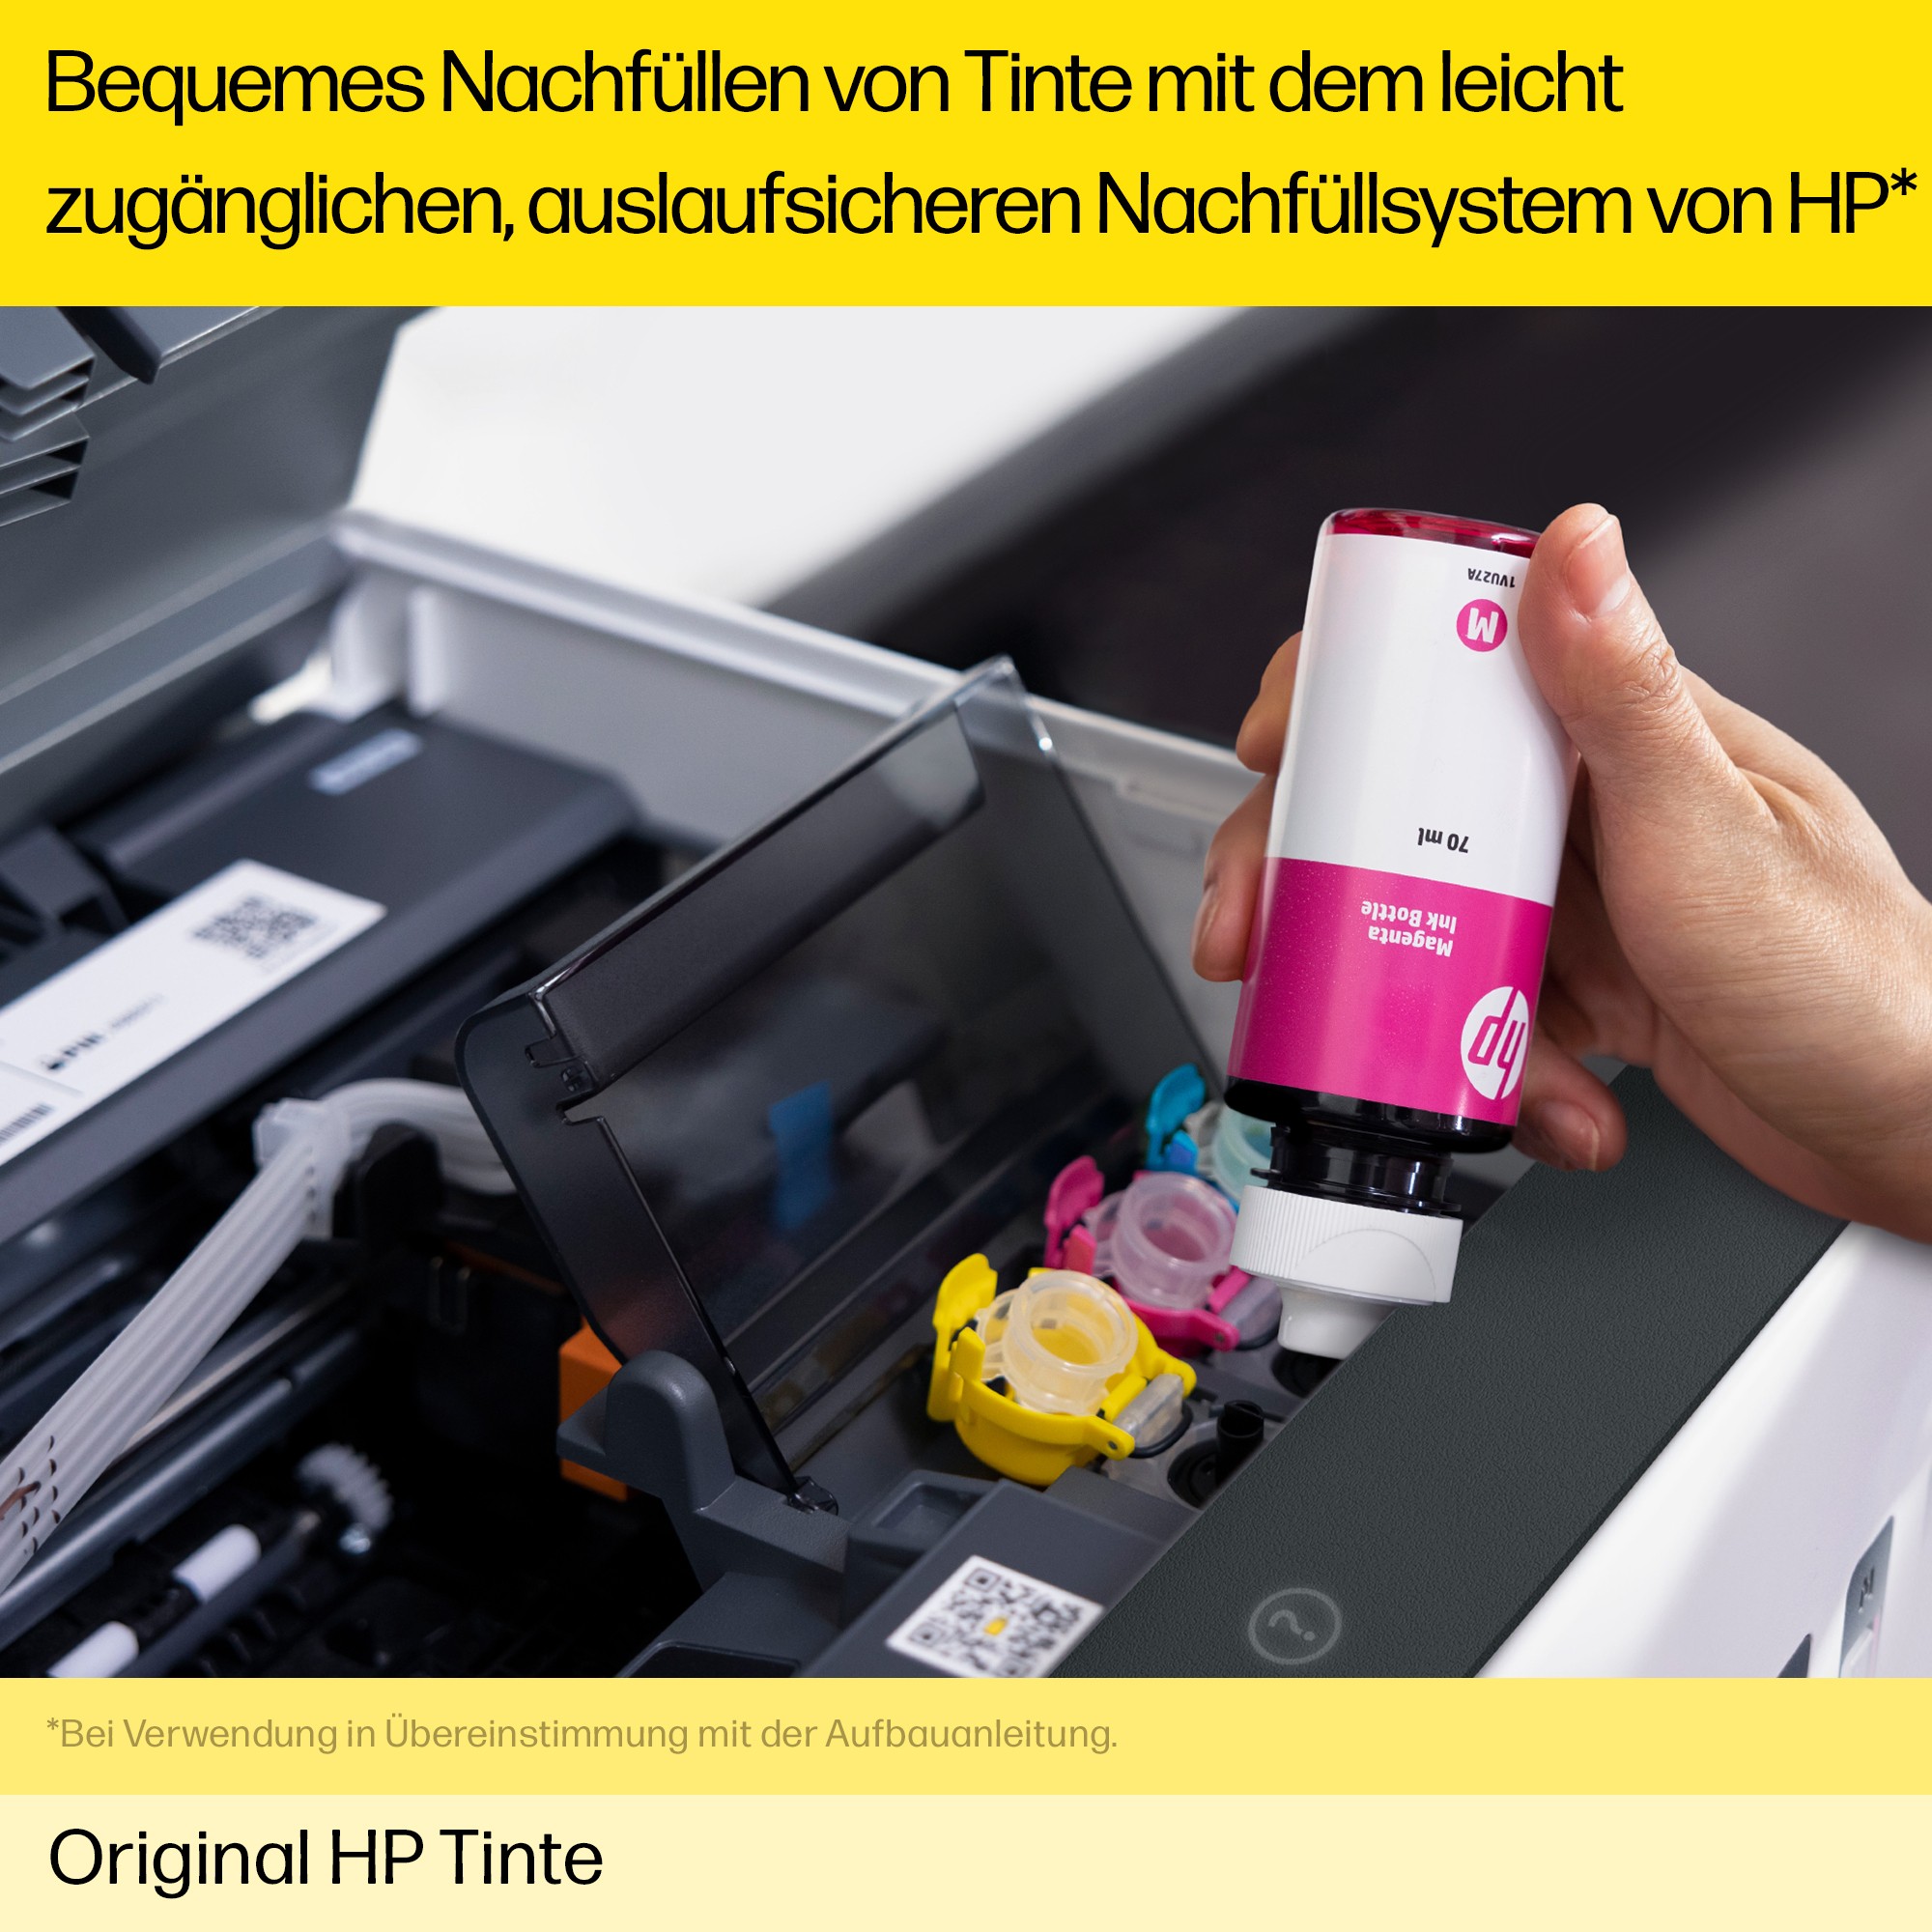 HP 912 4er-Pack Original-Druckerpatronen Schwarz/Cyan/Magenta/Gelb